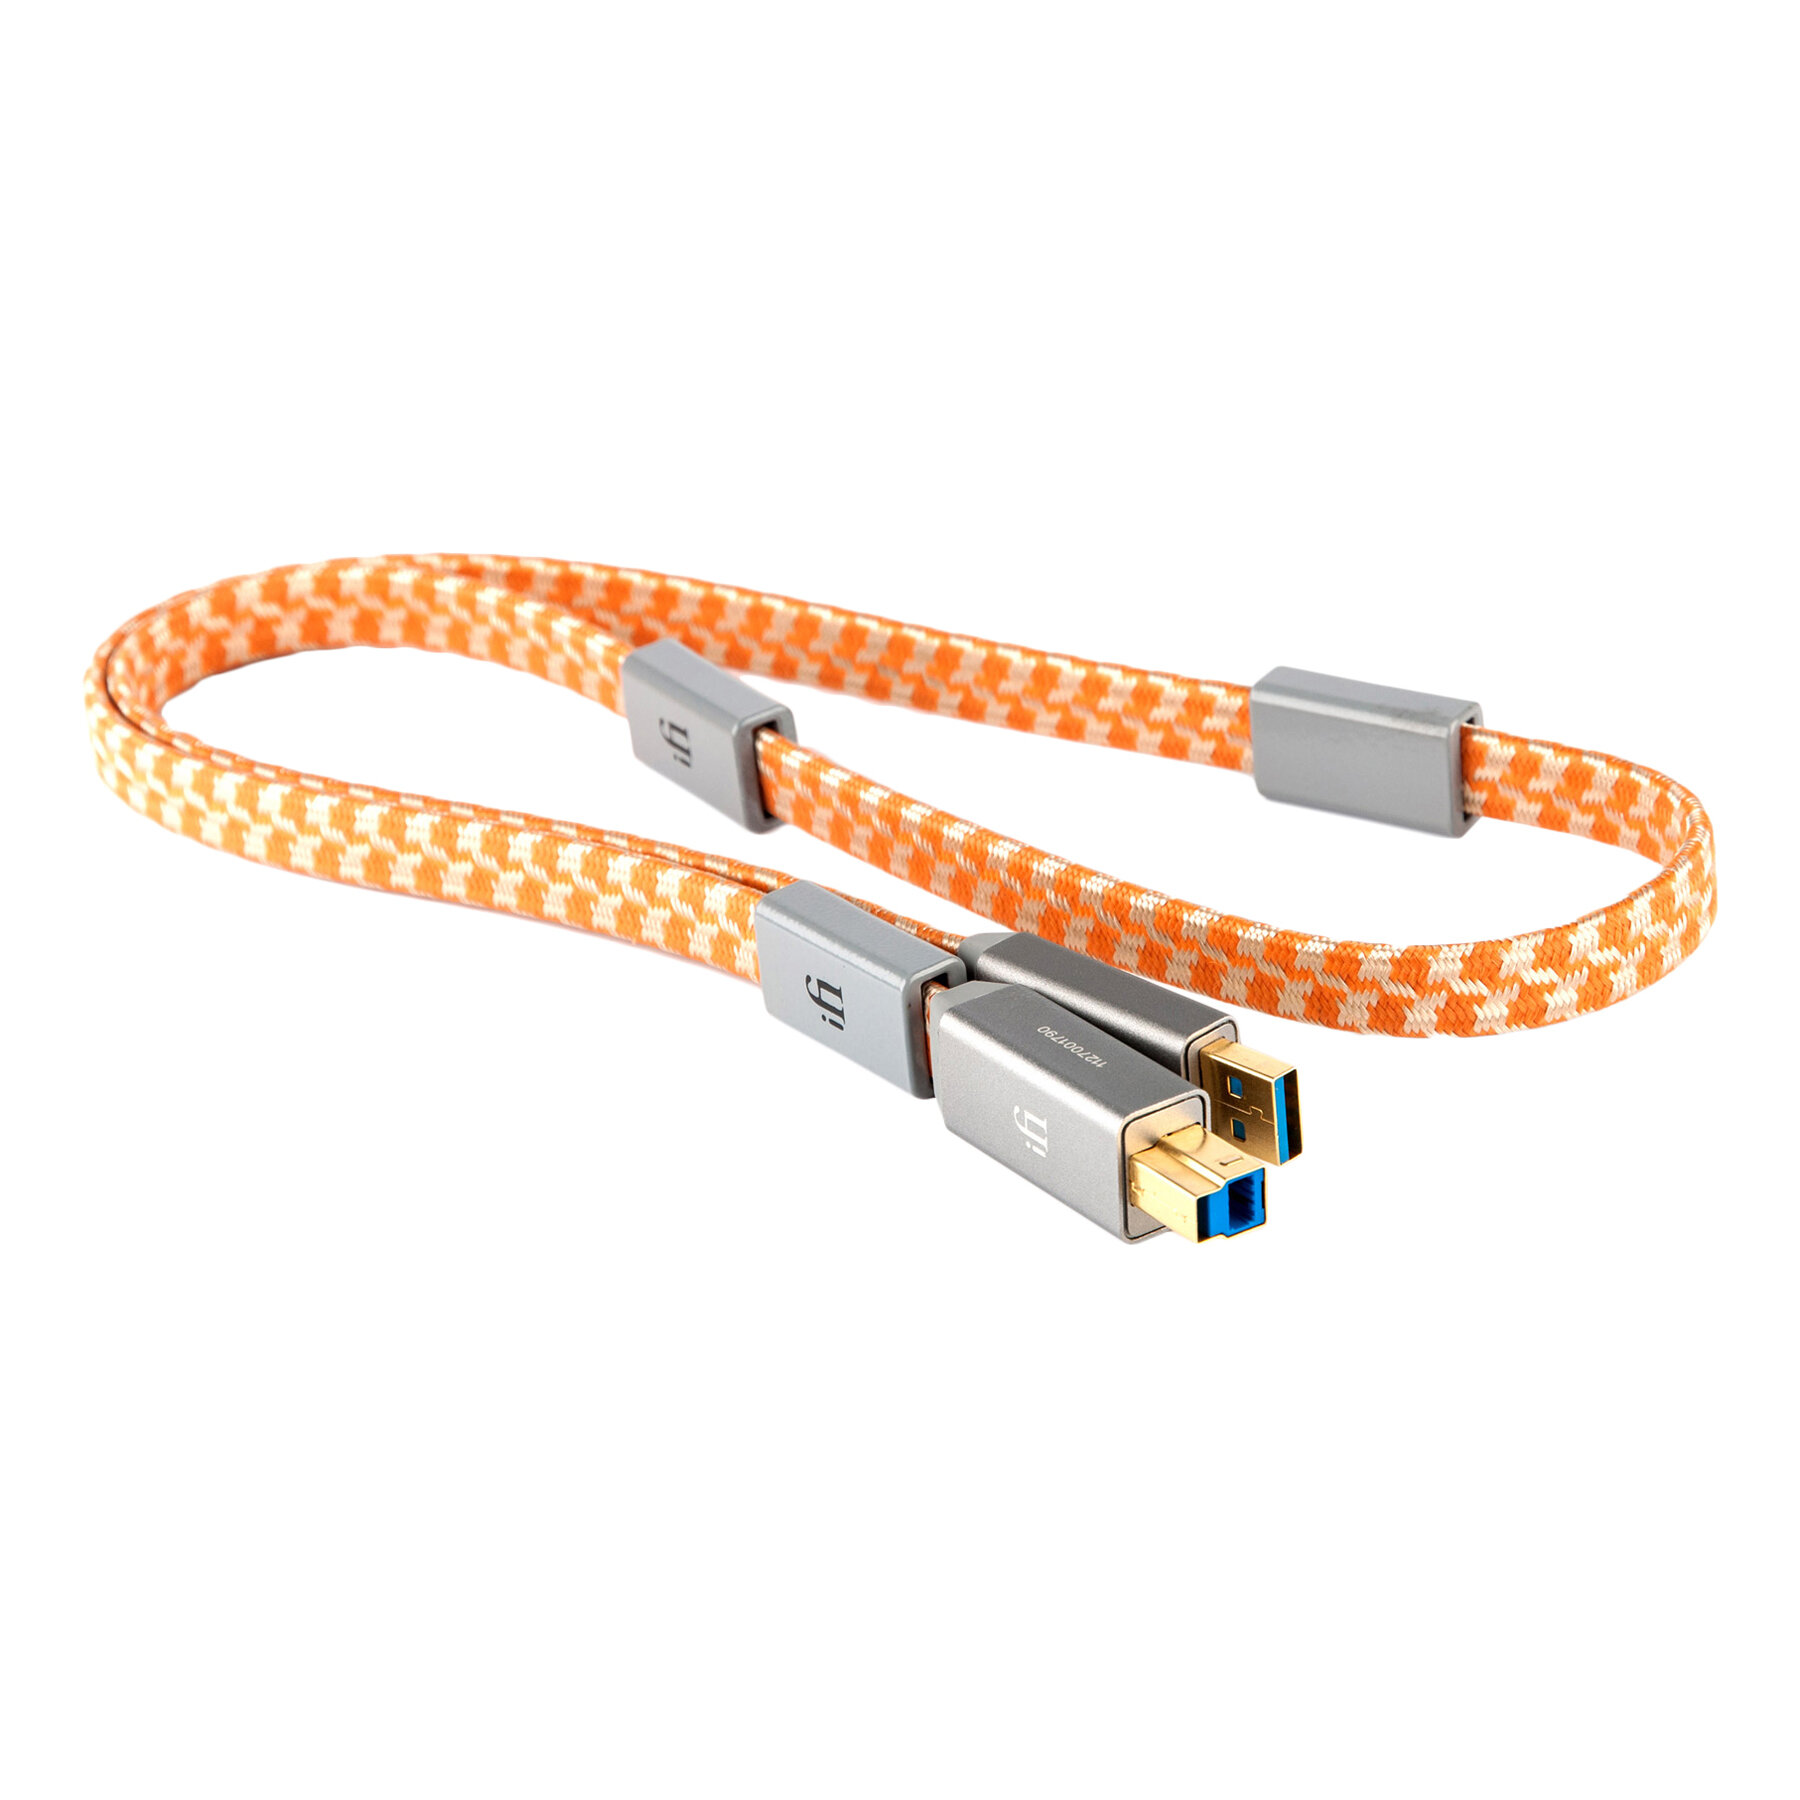 iFi Mercury cable 3.0 (USB 3.0 B connector) 0.5m